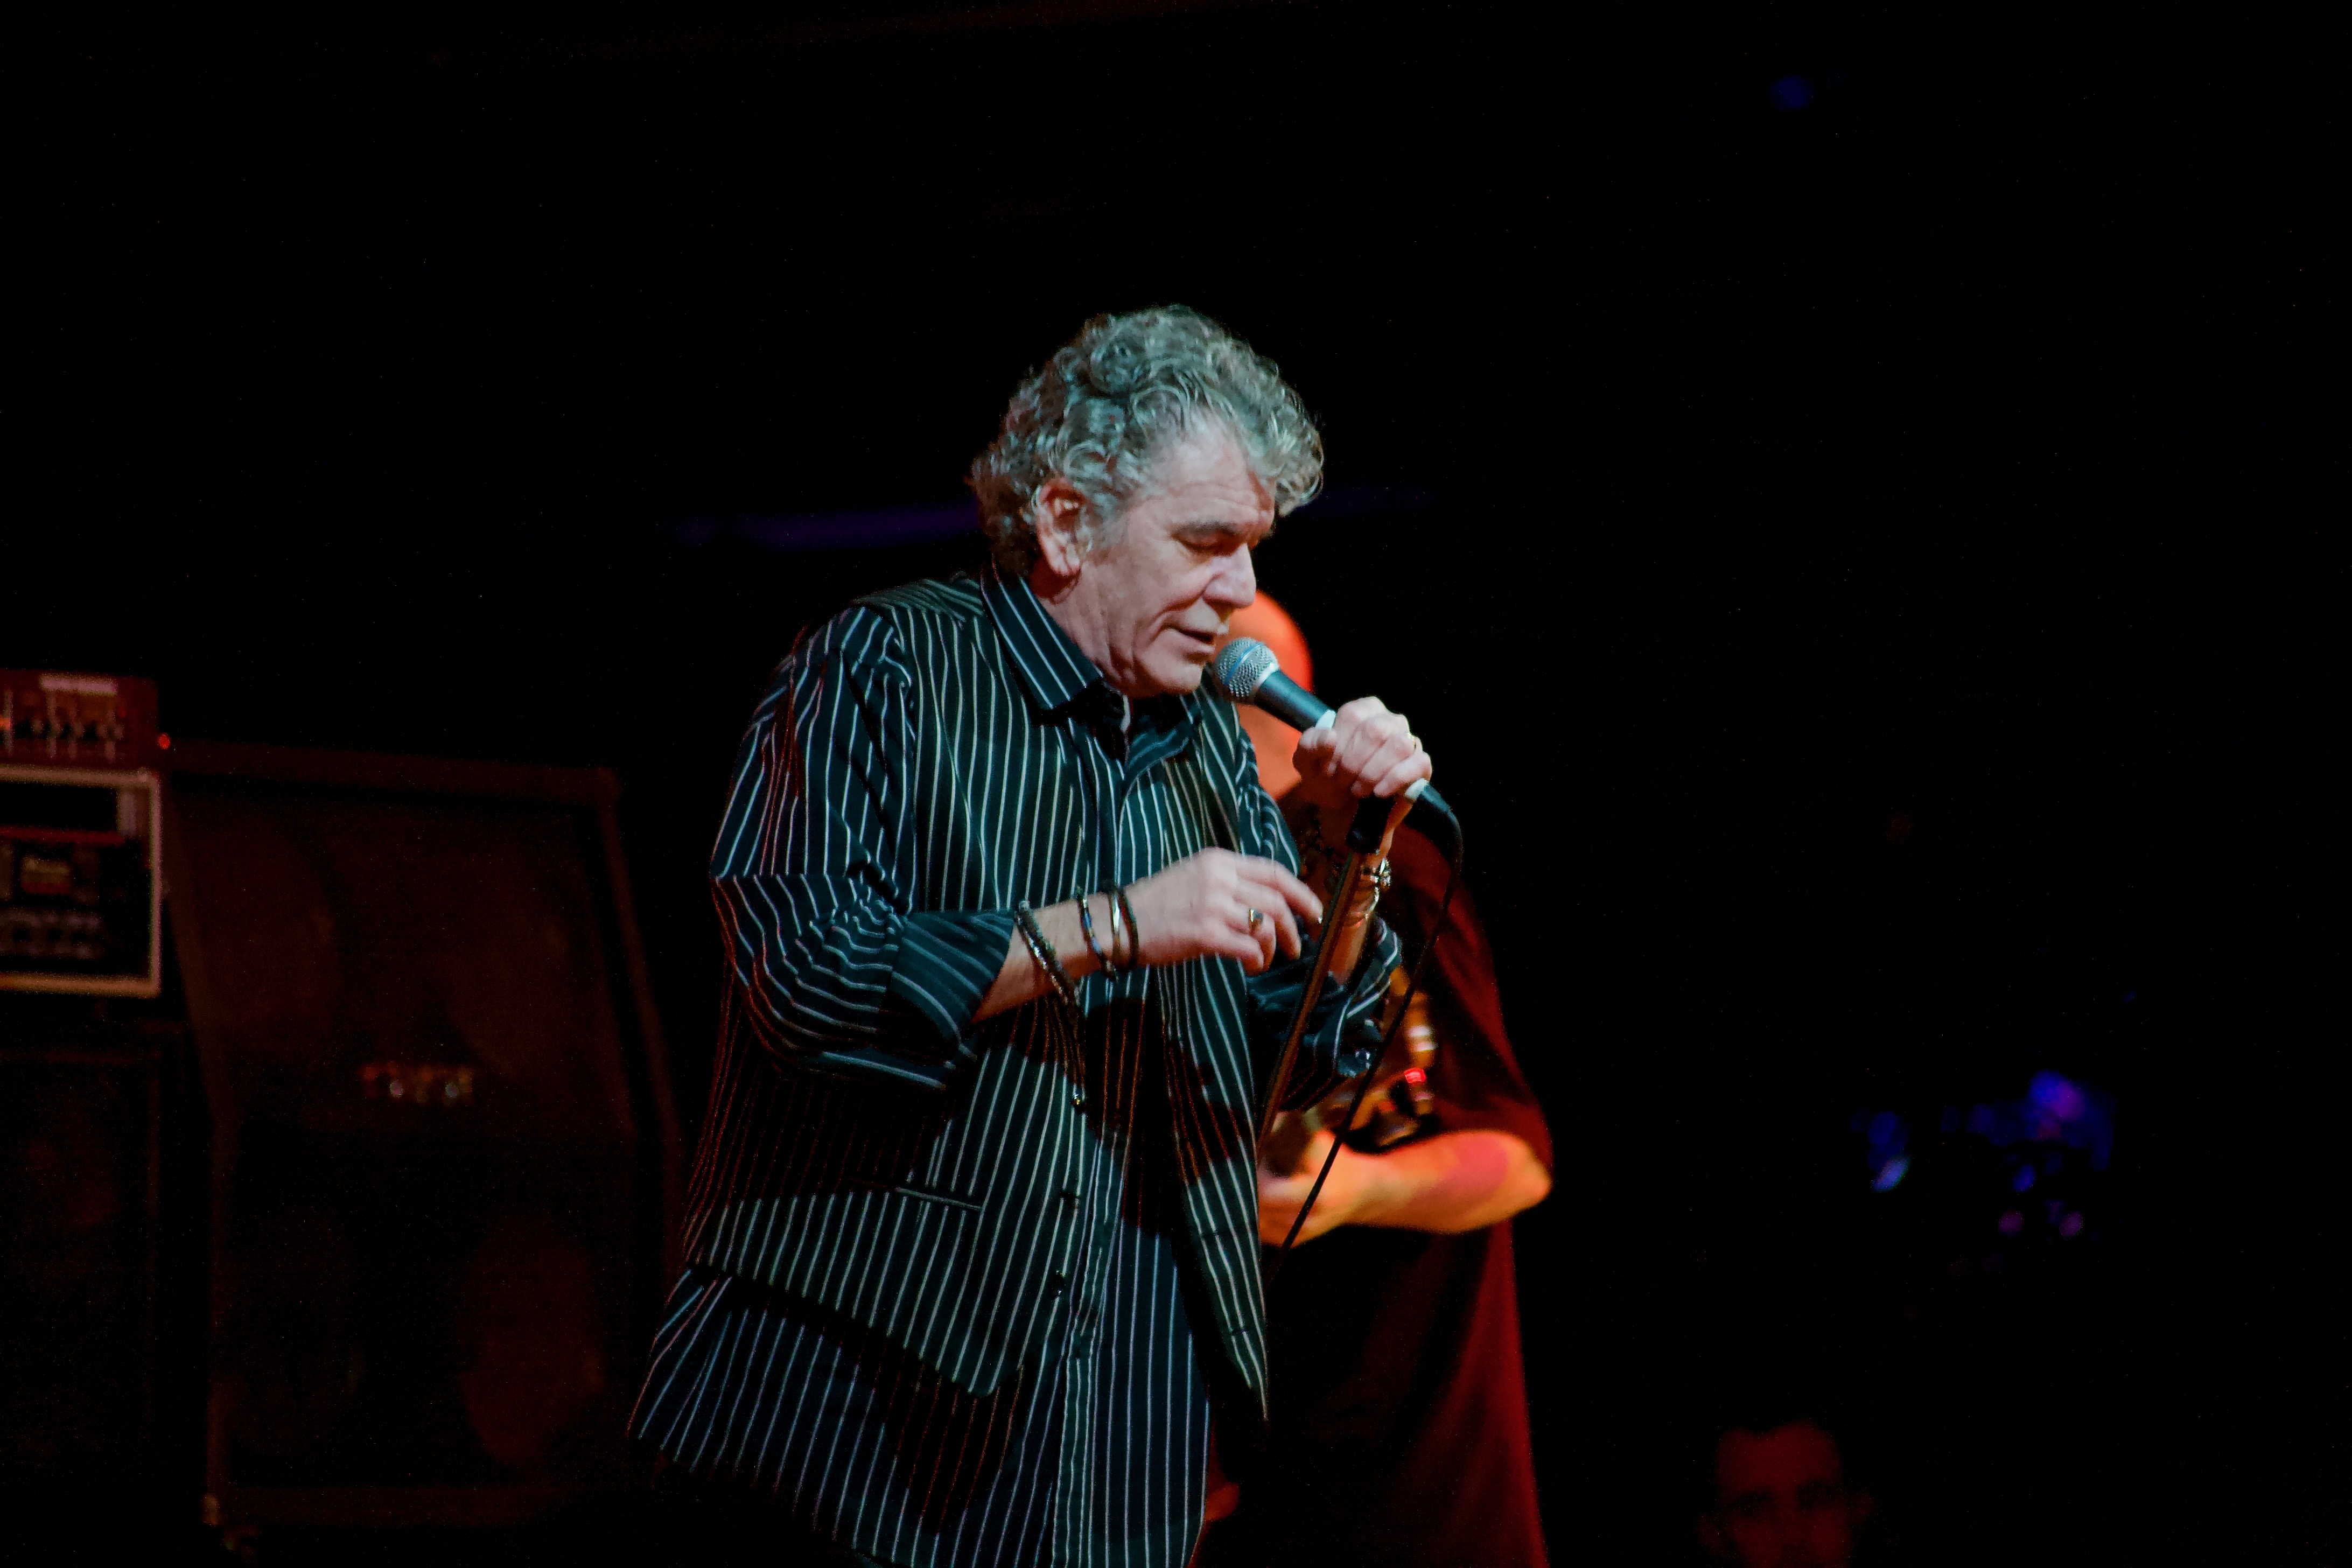 Дэн Макафферти на концерте в Одессе 16 октября 2008 года